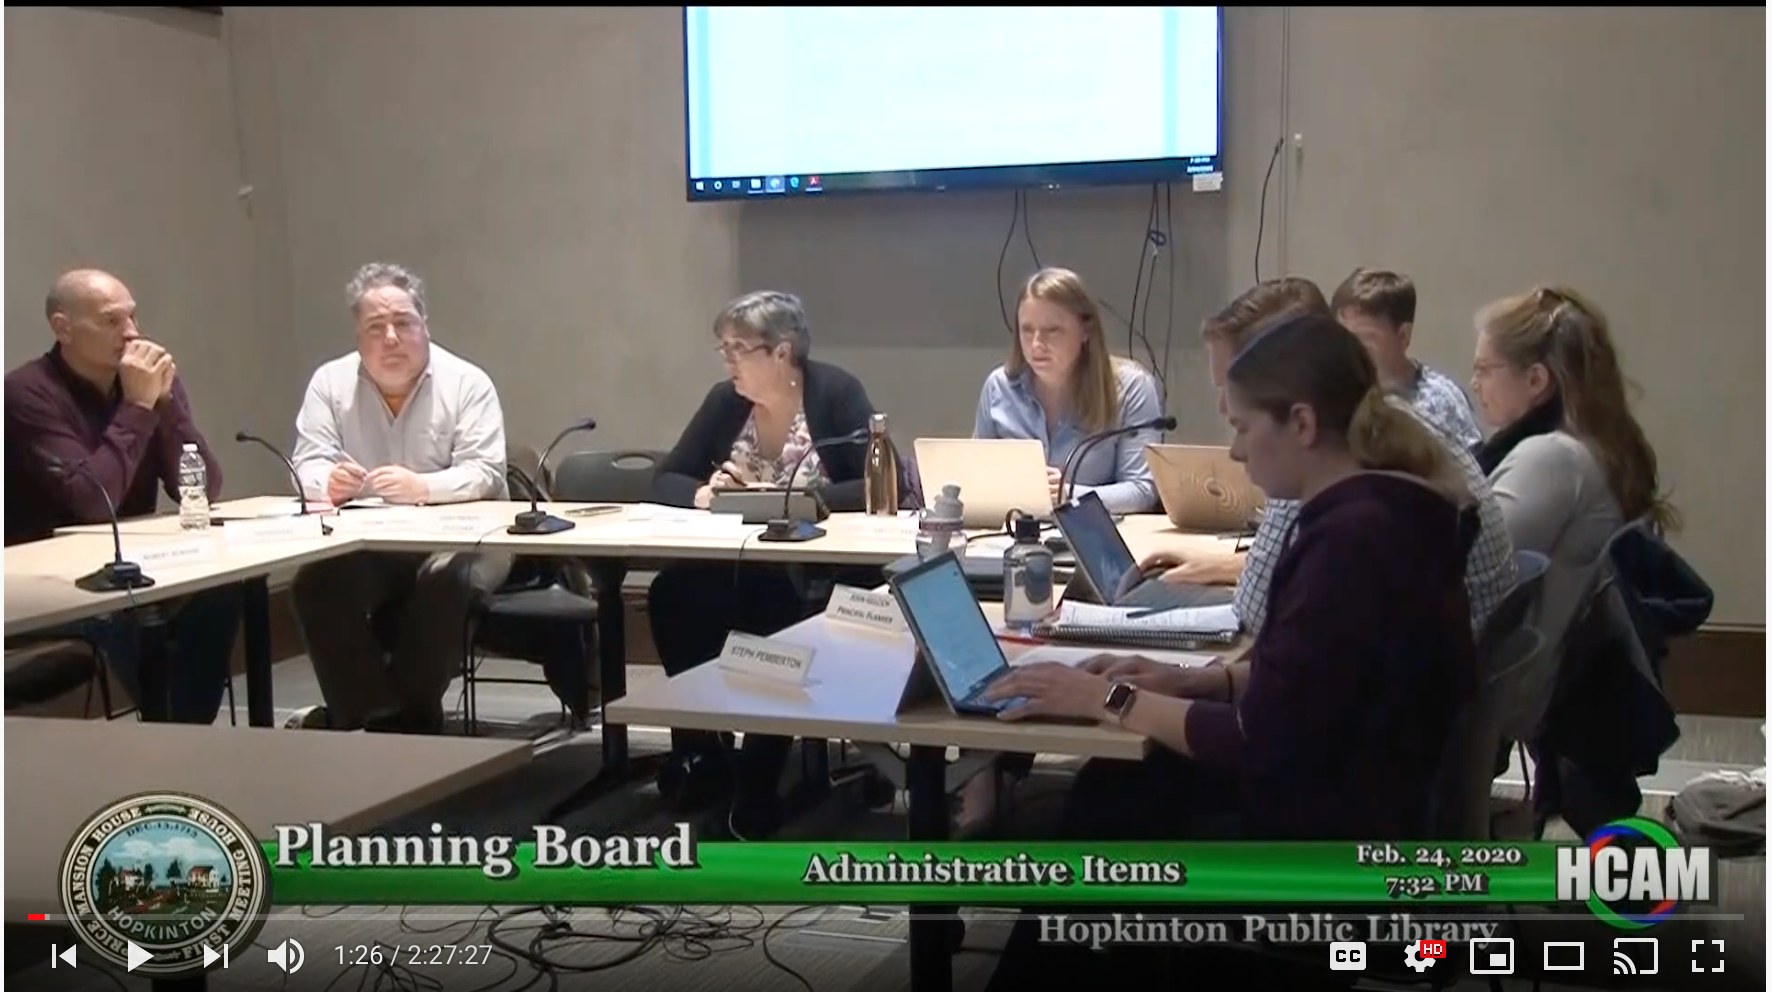 Planning Board Actions Taken 2/24/20